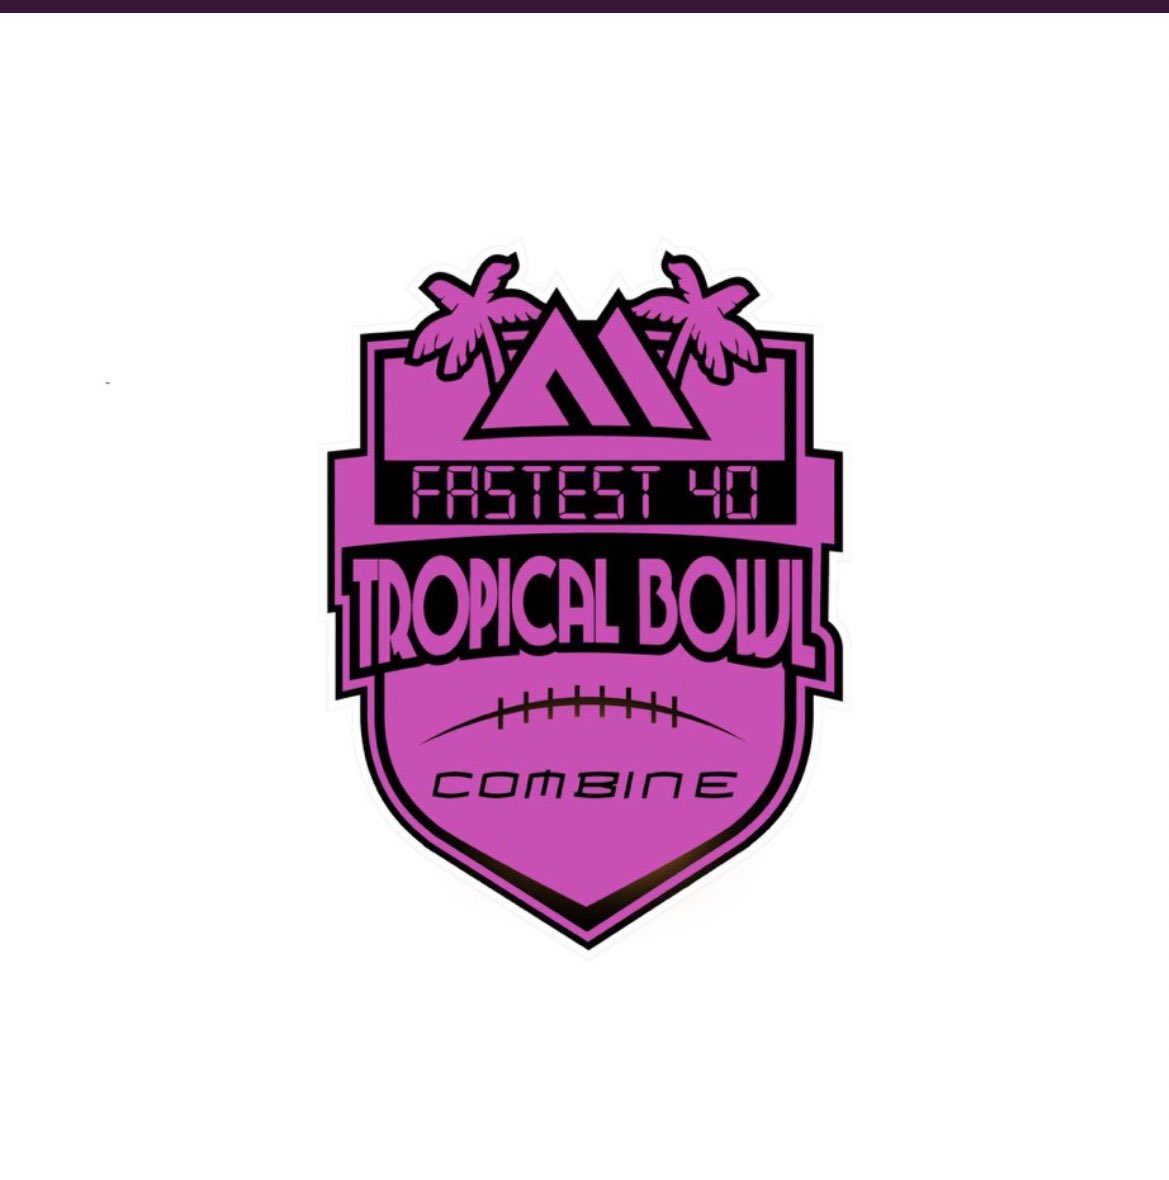 All glory to God. Tropical Bowl Fastest 40 invite 🙏🏽 @TropicalBowlUSA